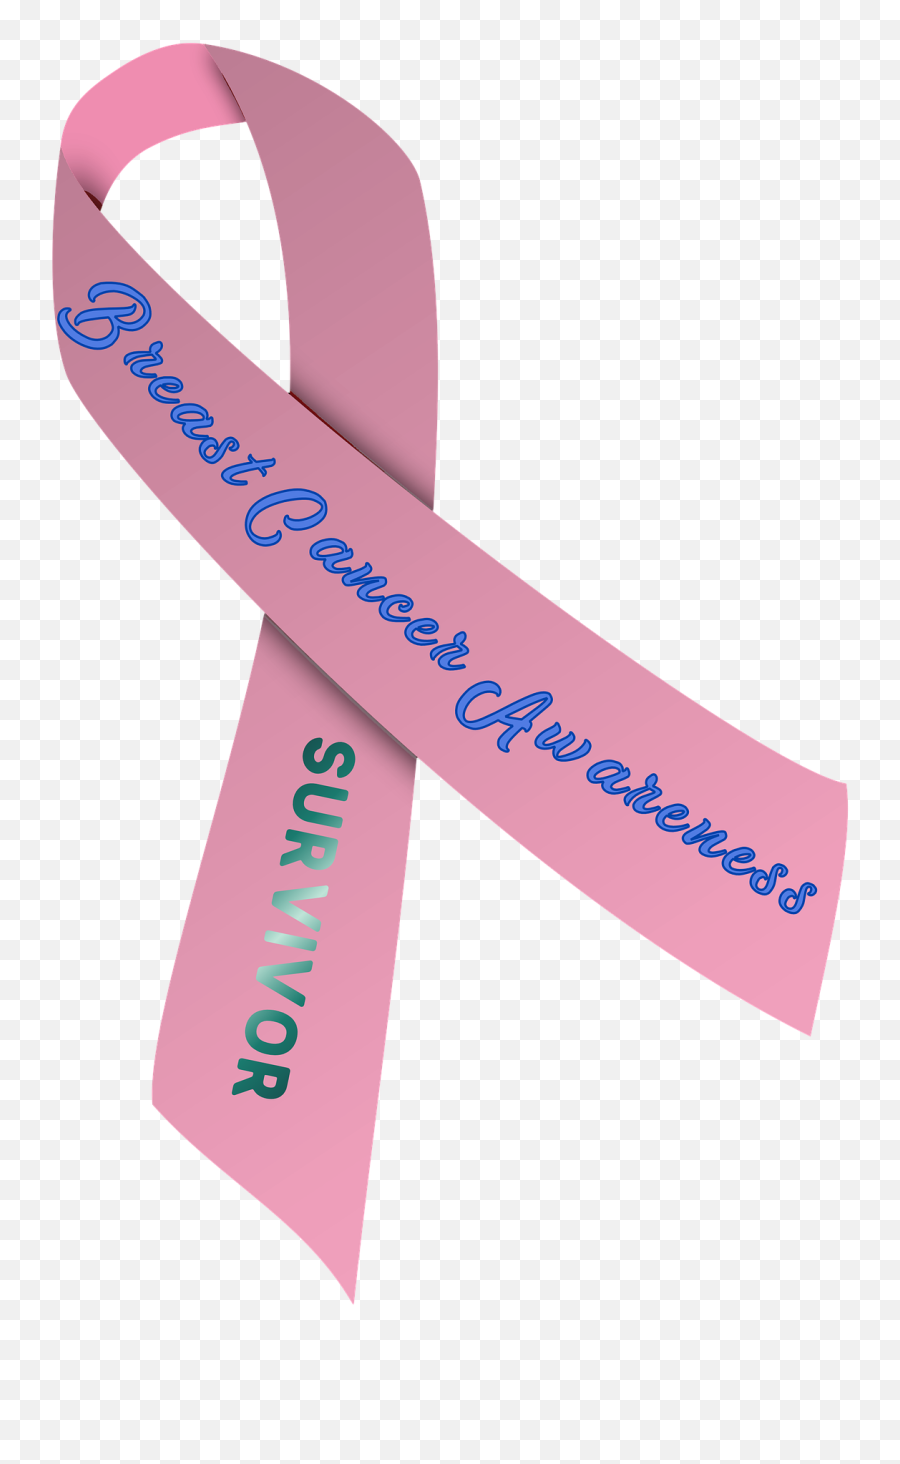 Self - Breast Cancer Previvor Emoji,How To Get Awareness Ribbon Emojis